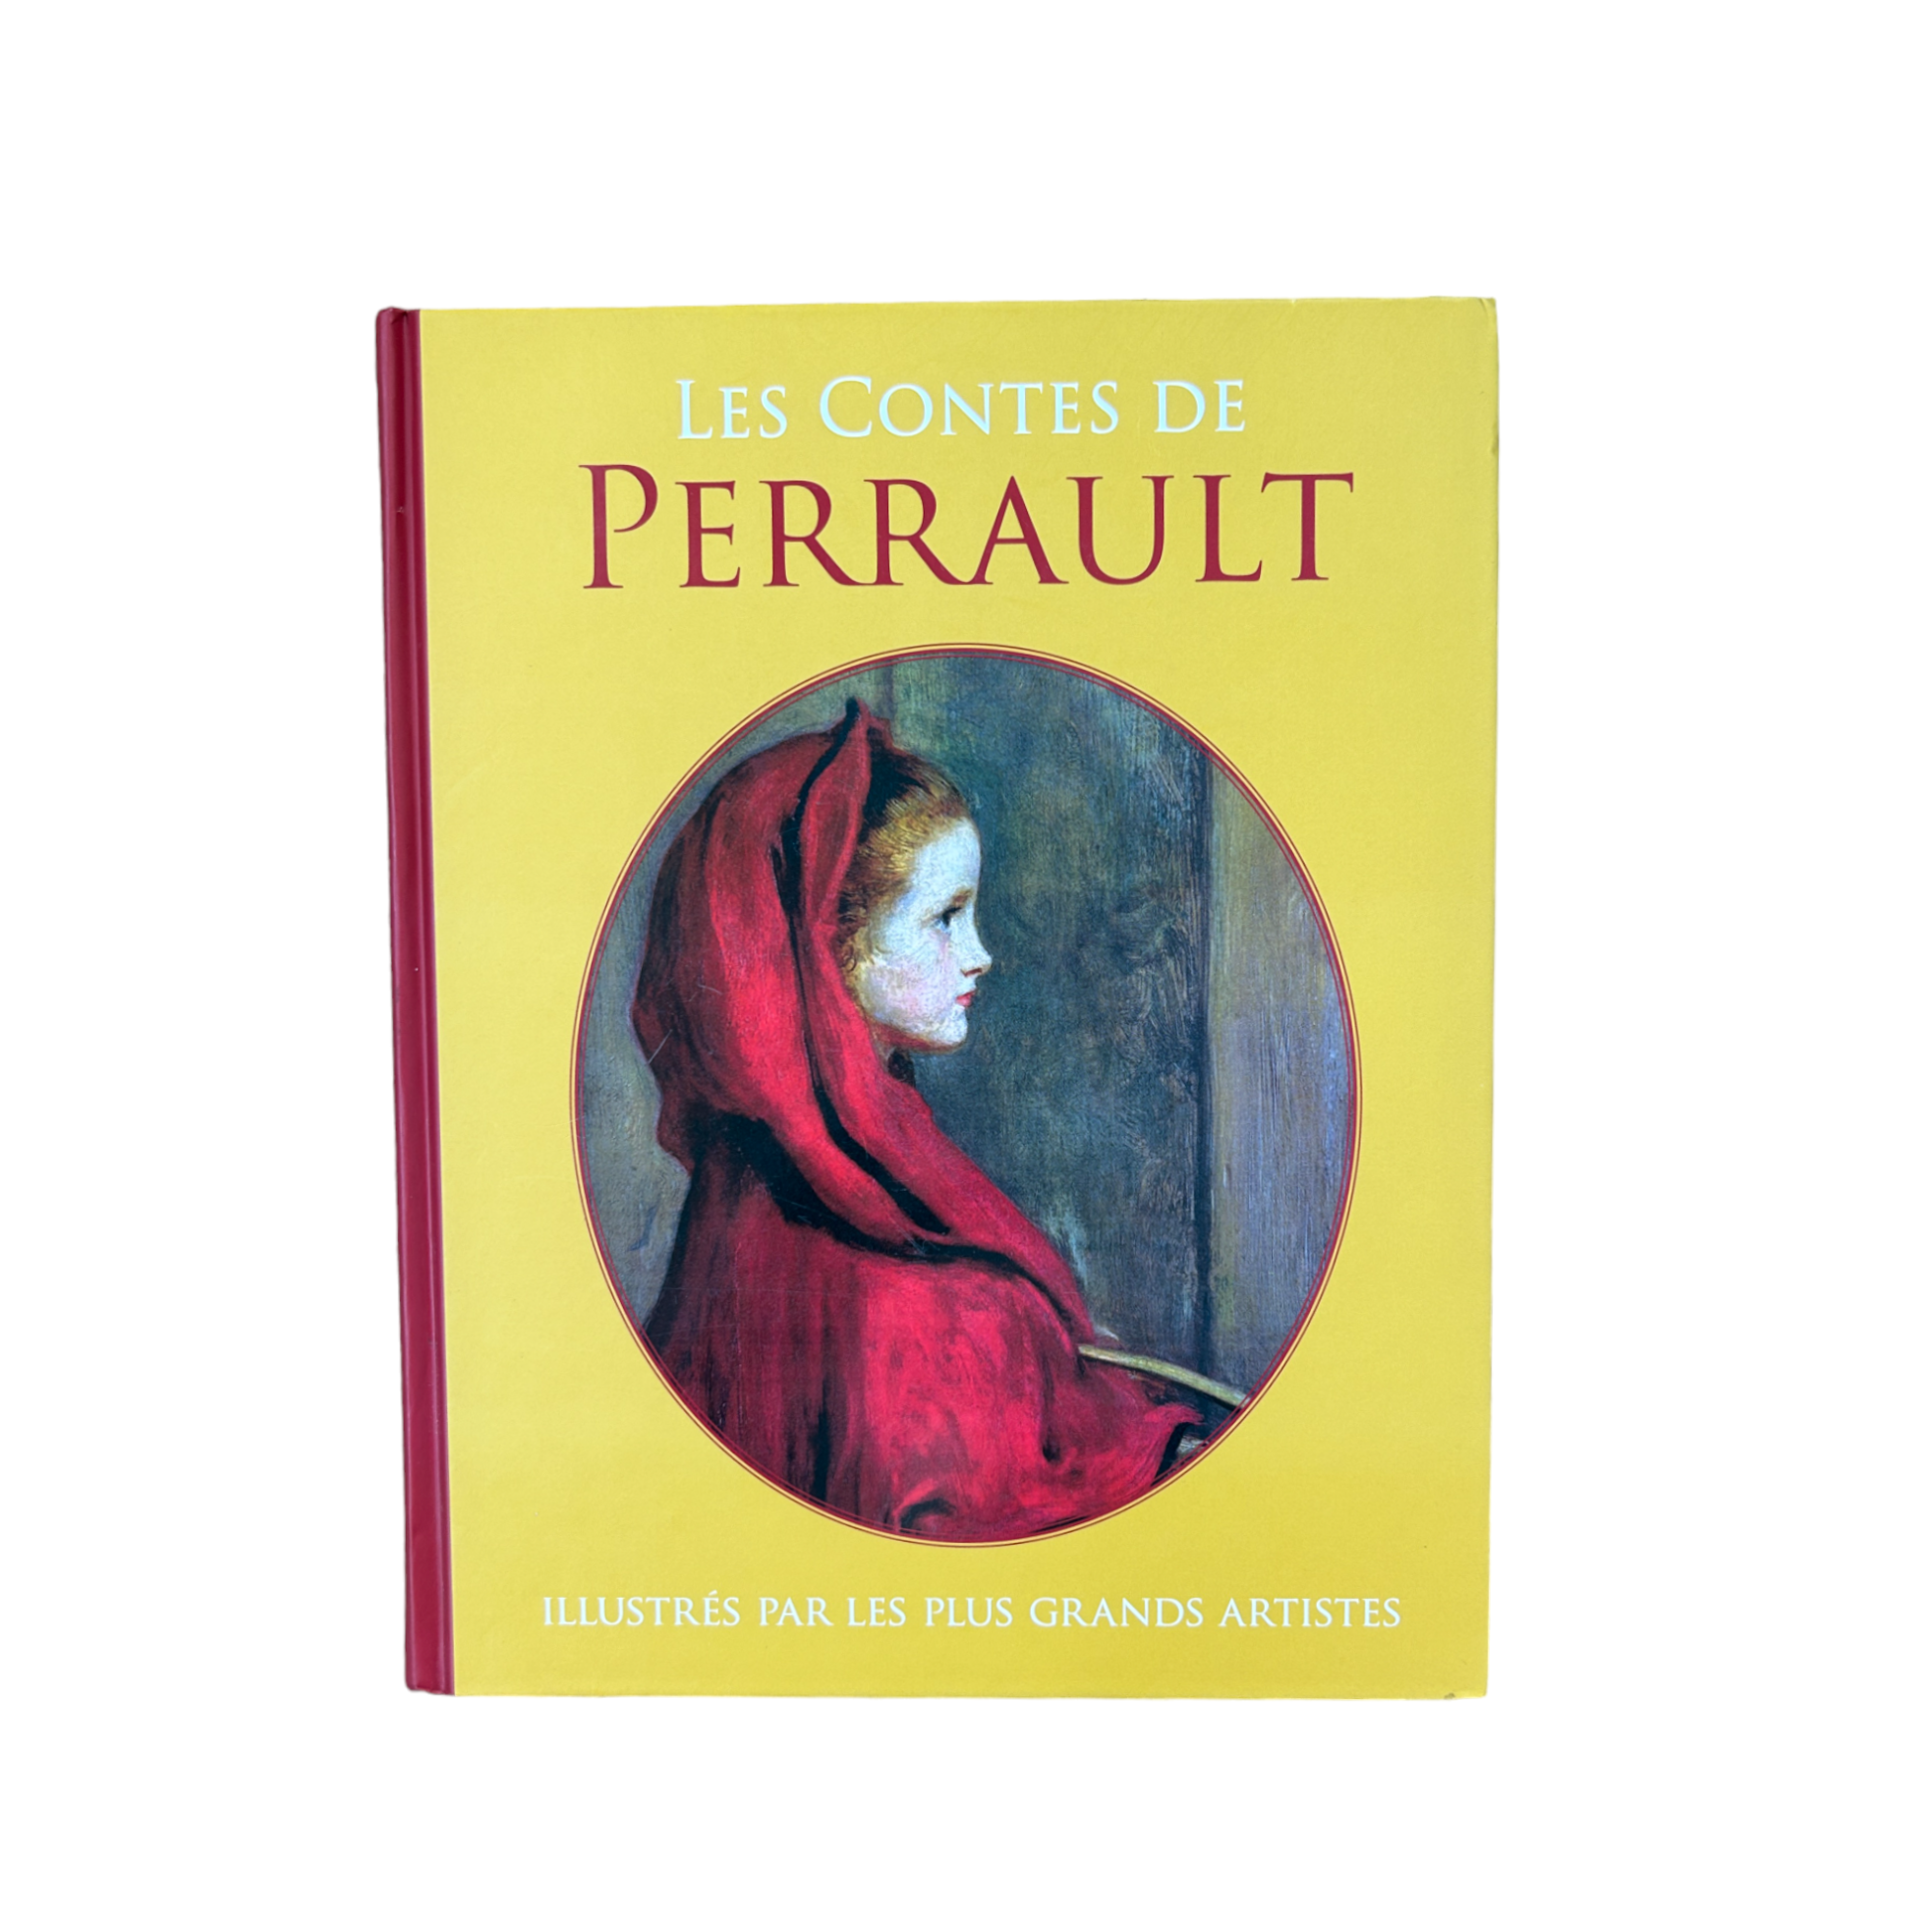 Les contes de Perrault illustrés par les plus grands artistes